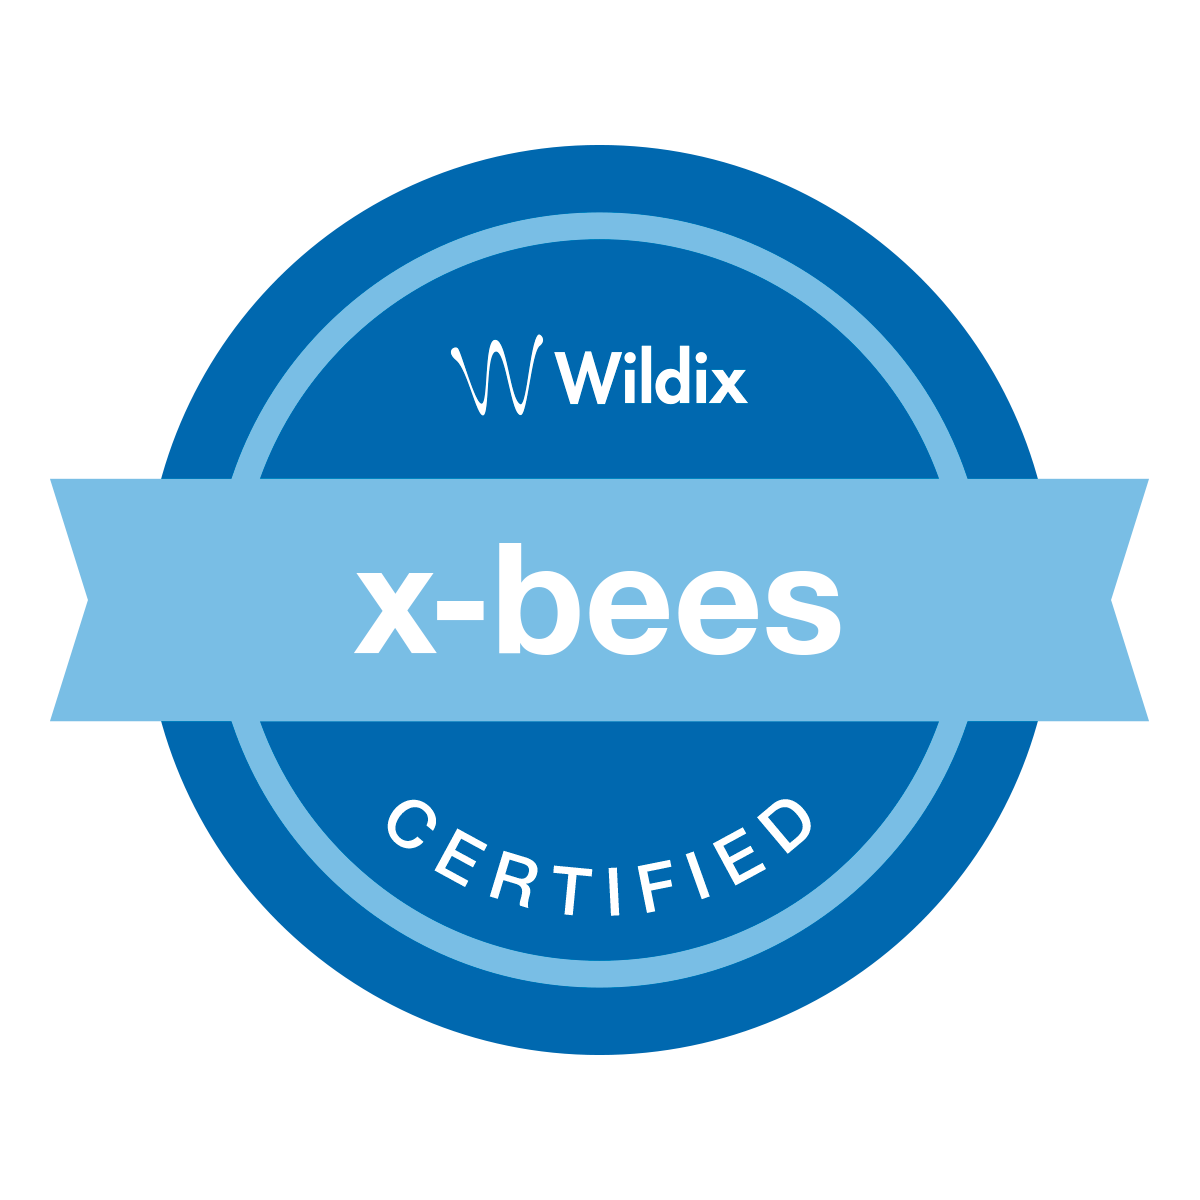 x-bees Partner Program